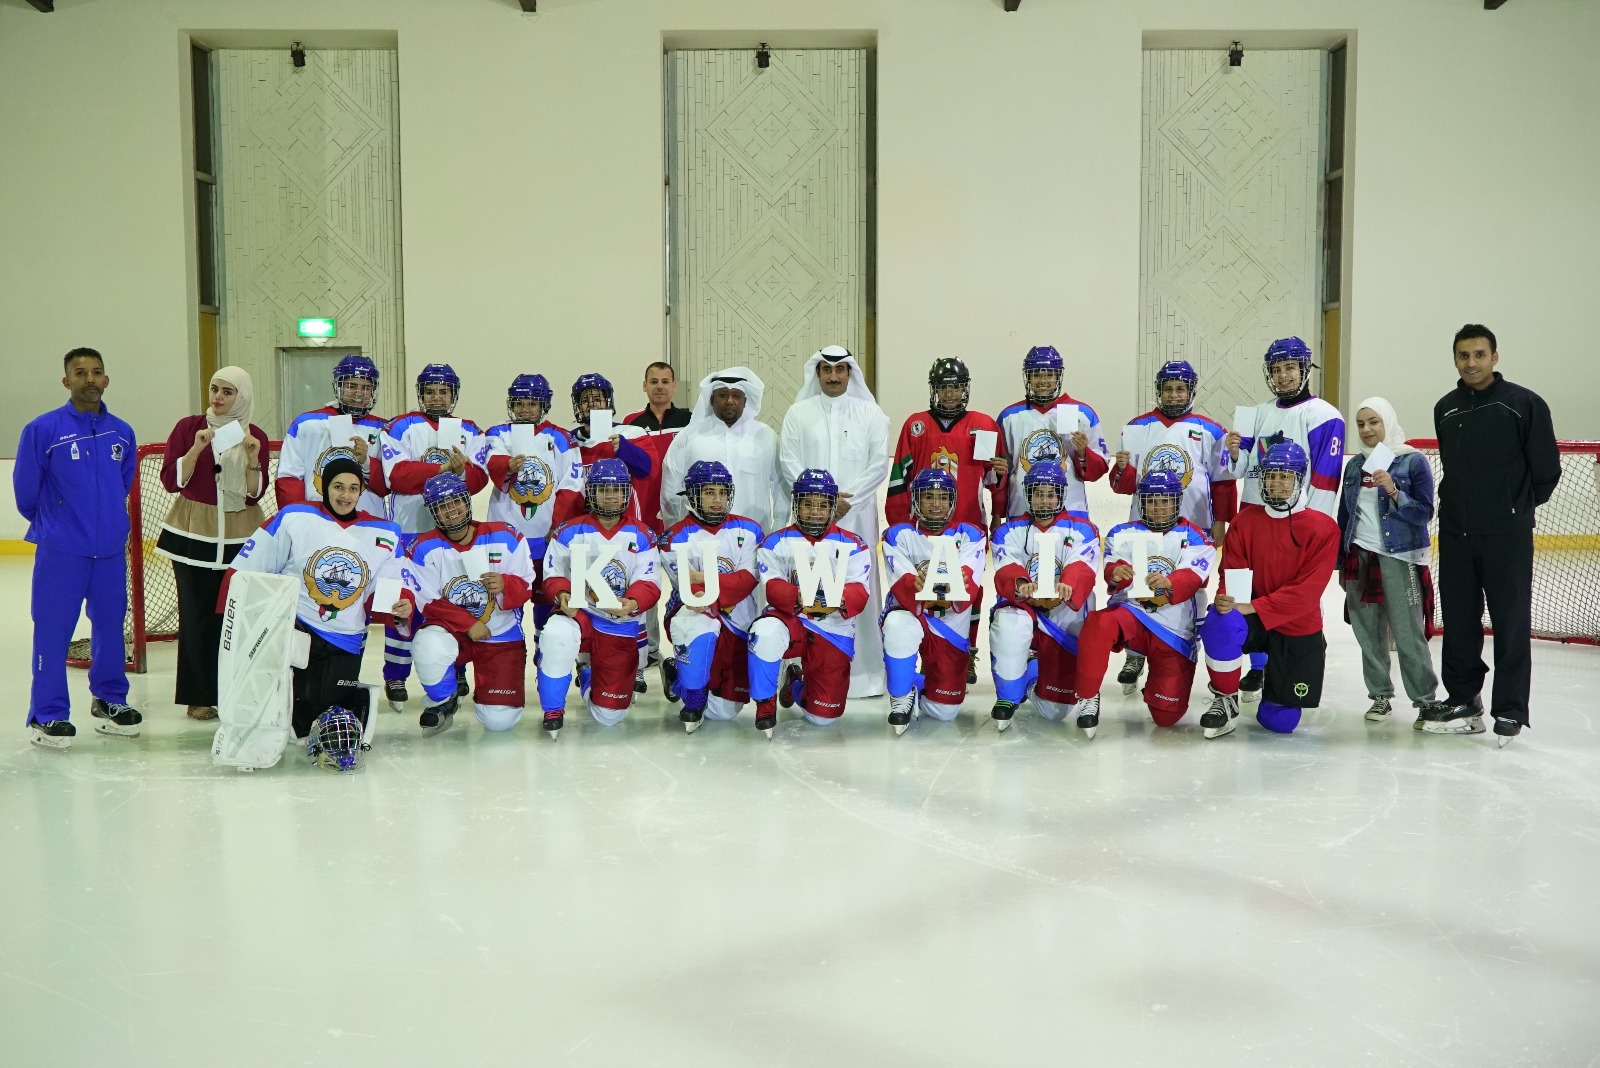 The Kuwait women's ice hockey team